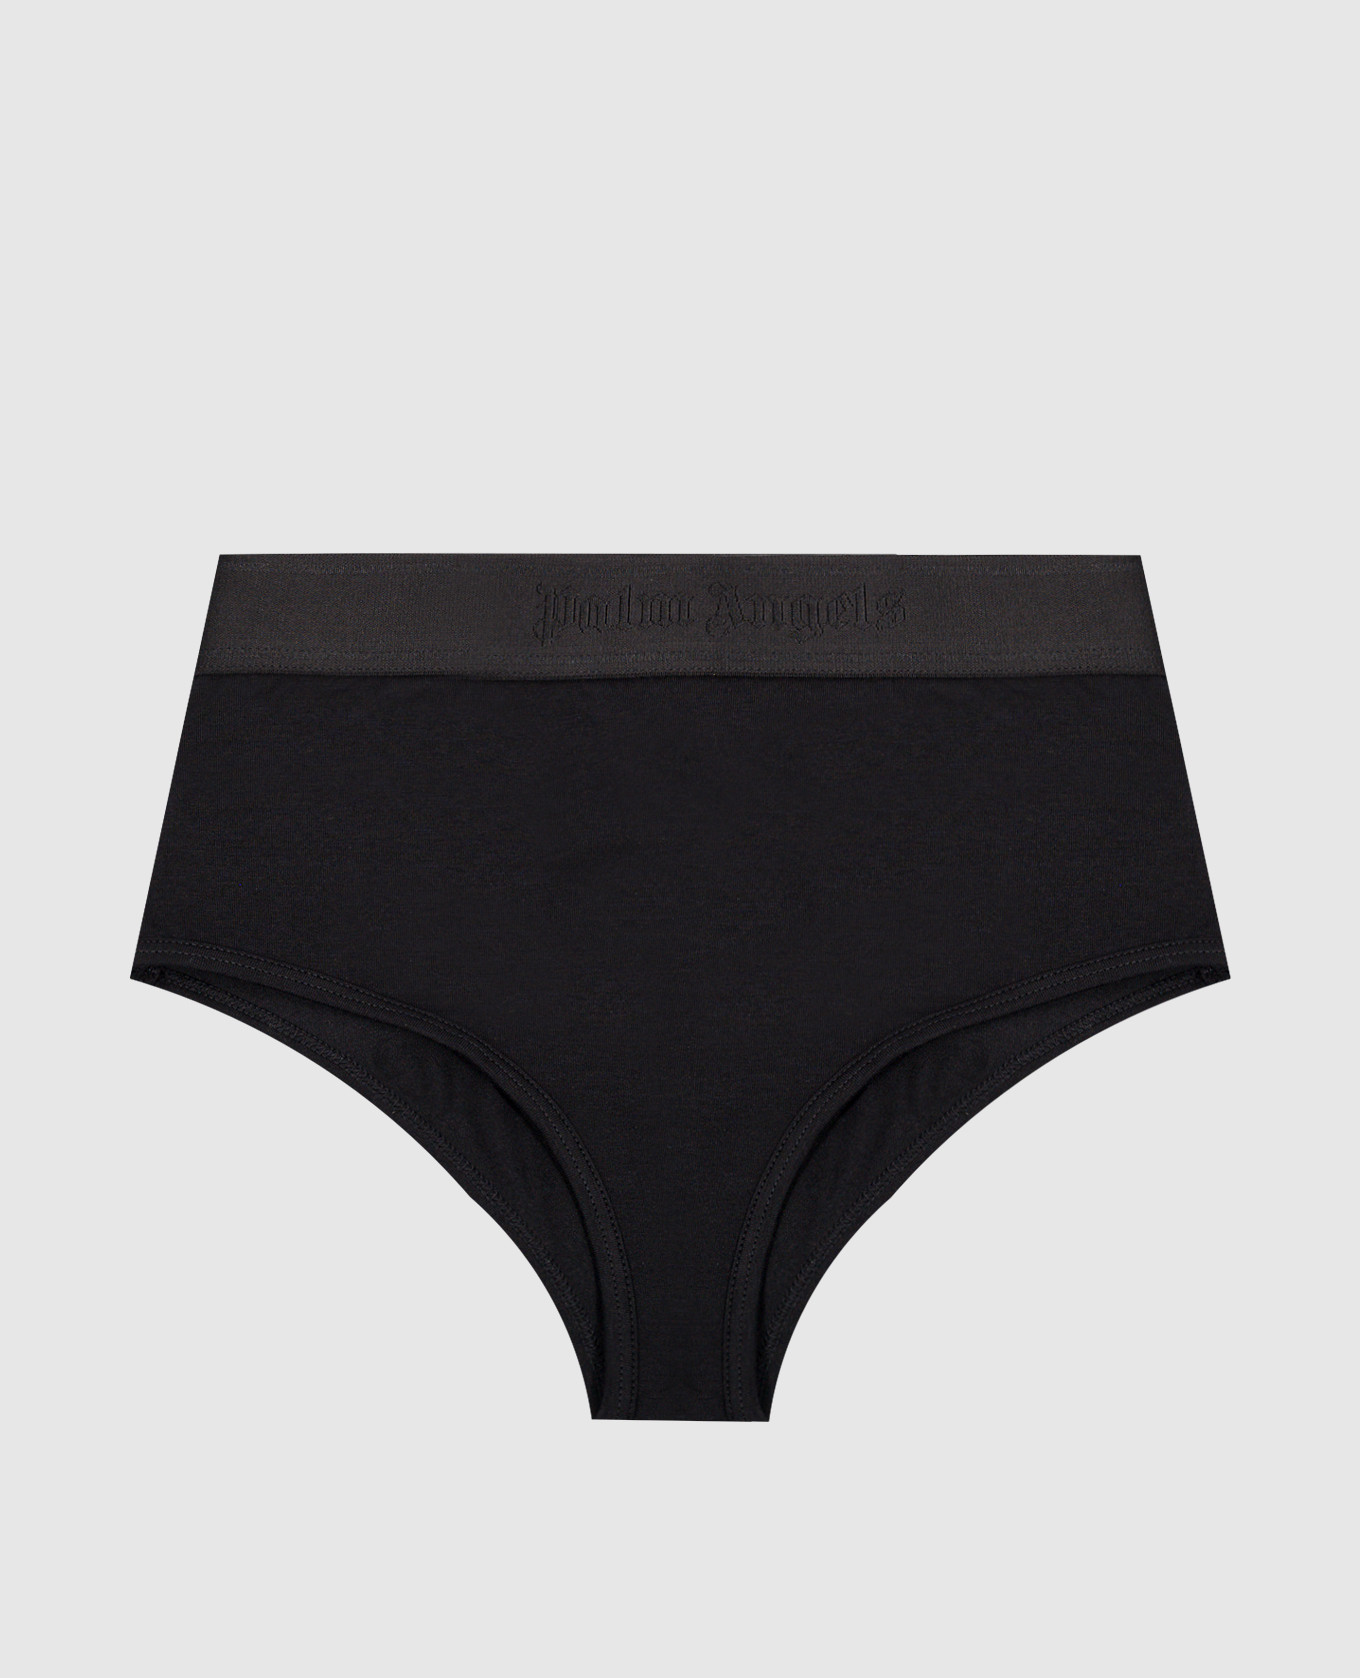 Black panties with a logo pattern